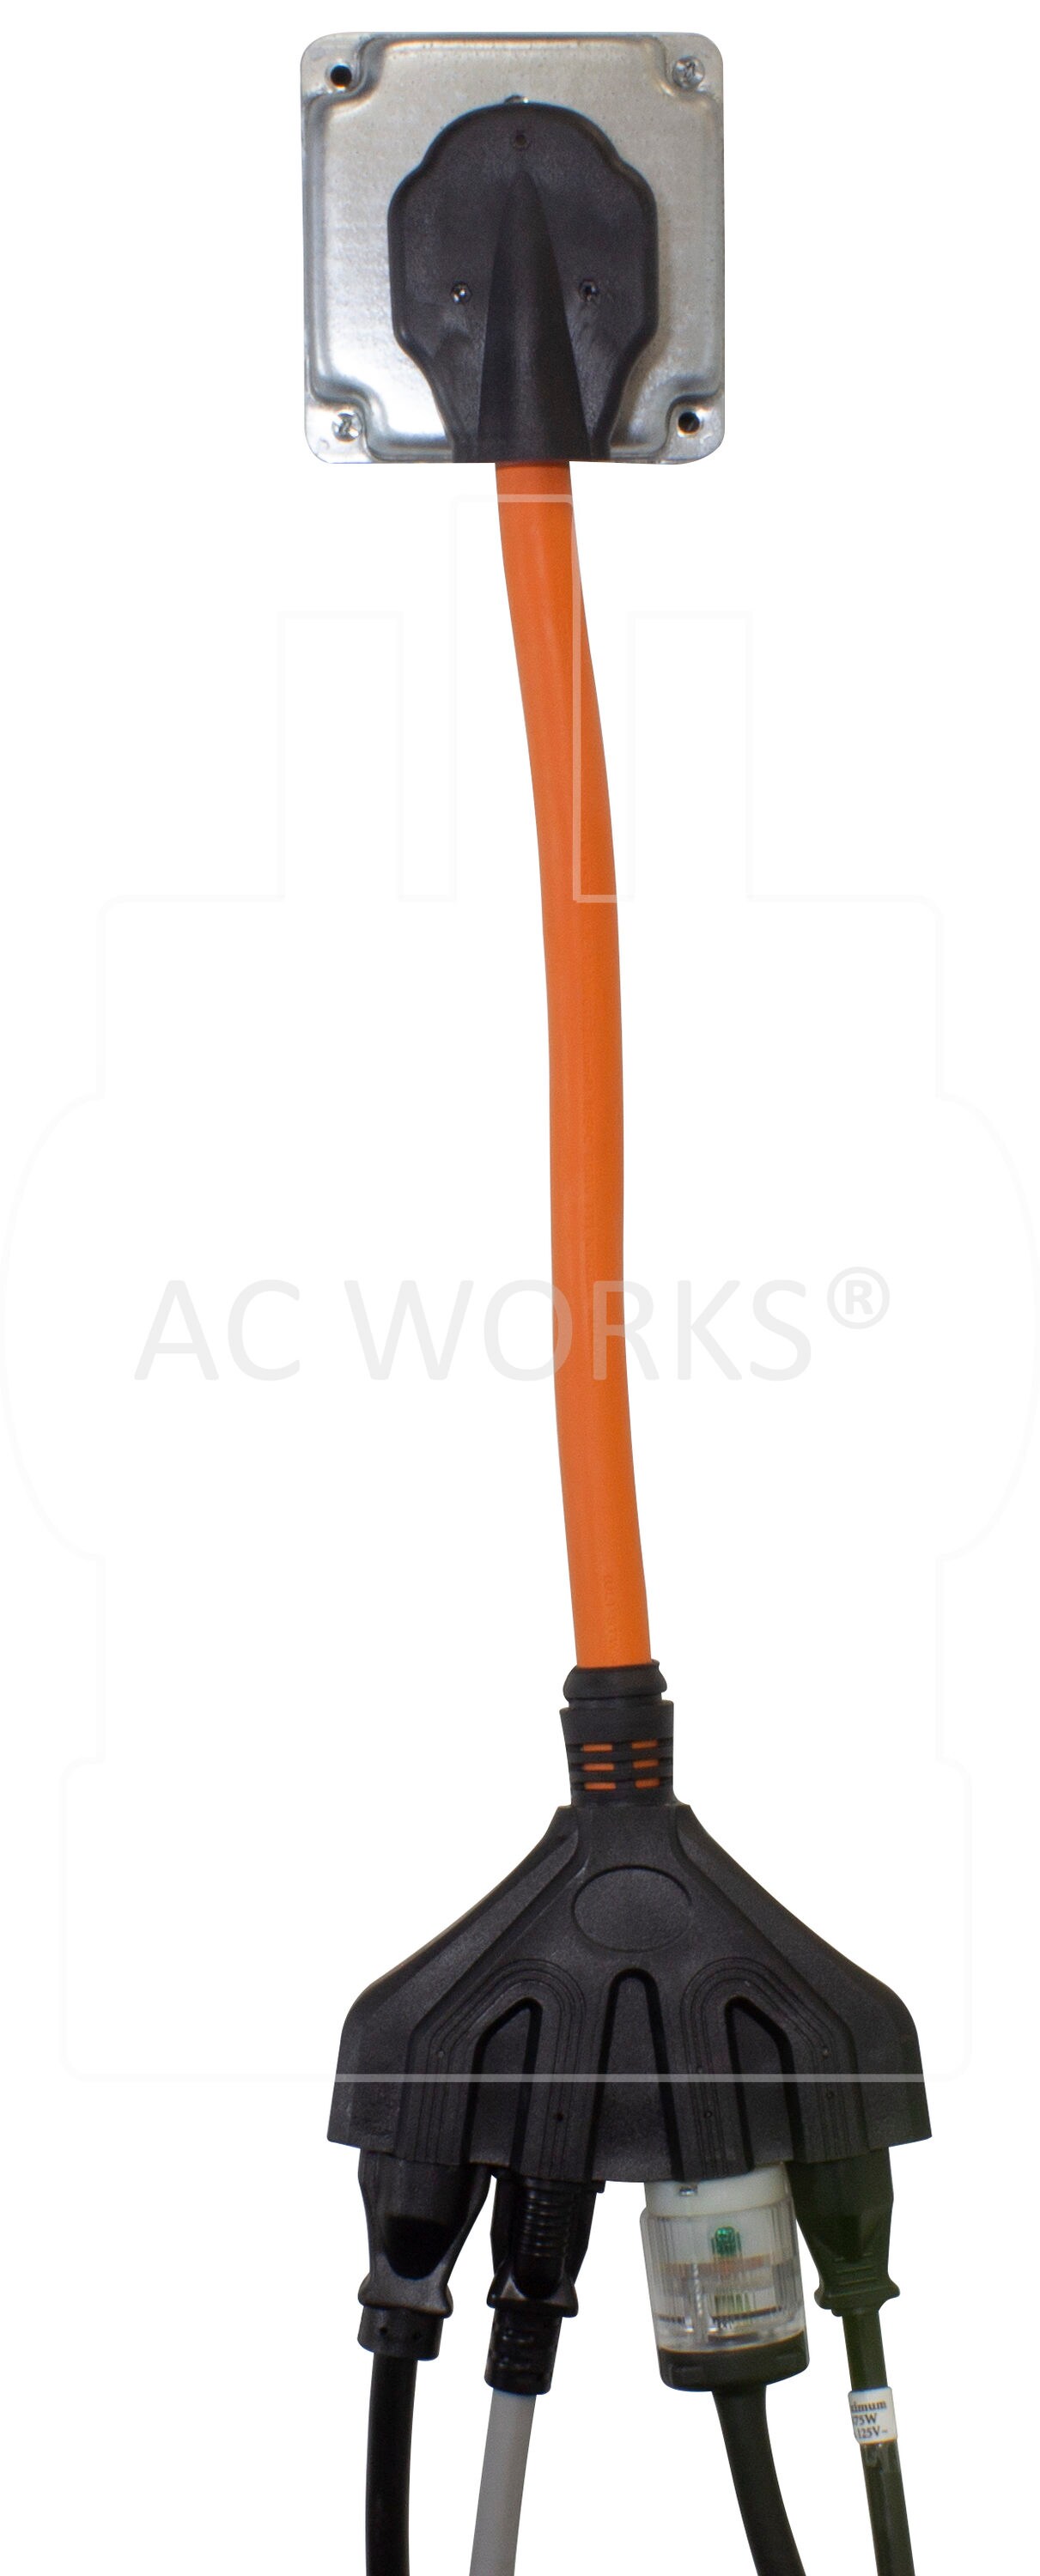 AC WORKS 1.5ft NEMA 14-50P to Four NEMA 5-20R 50-Amp 4-wire To 3-wire Grounding Single To Four Orange Basic Flexible Adapter